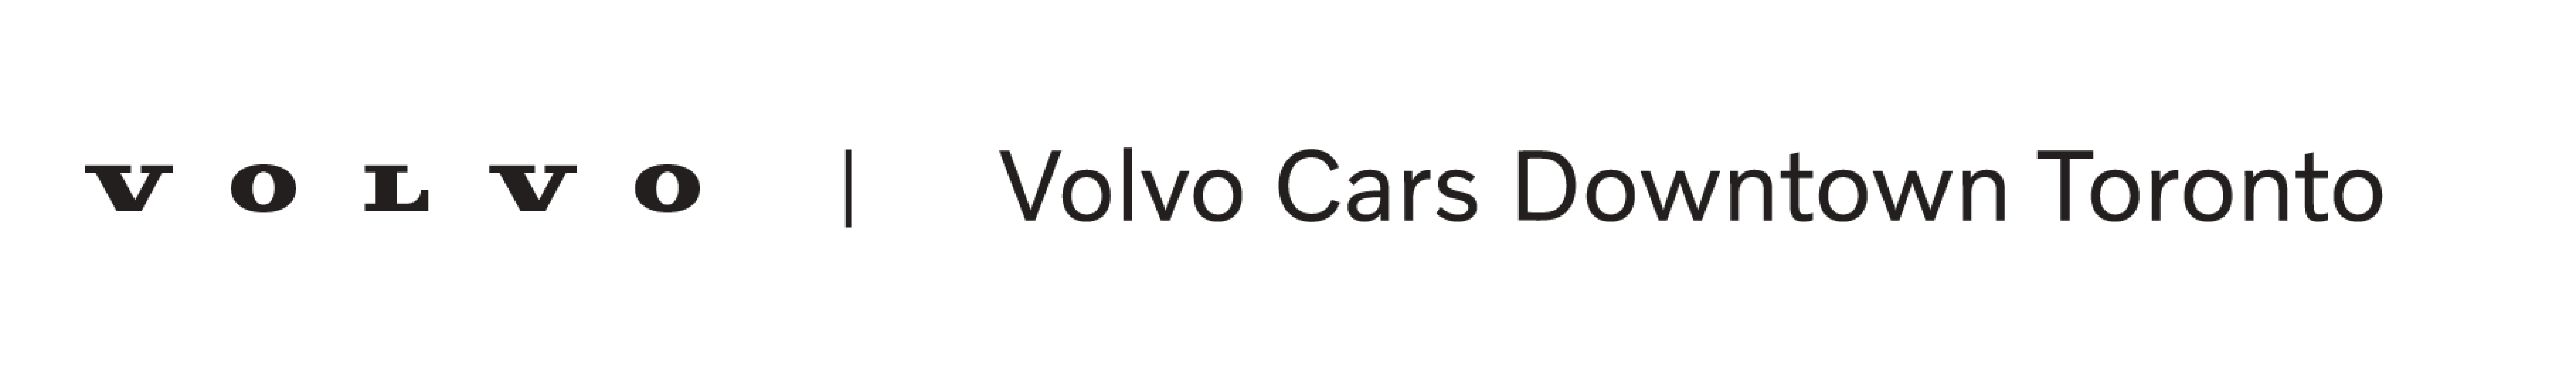 Volvo Cars Dowtown Toronto